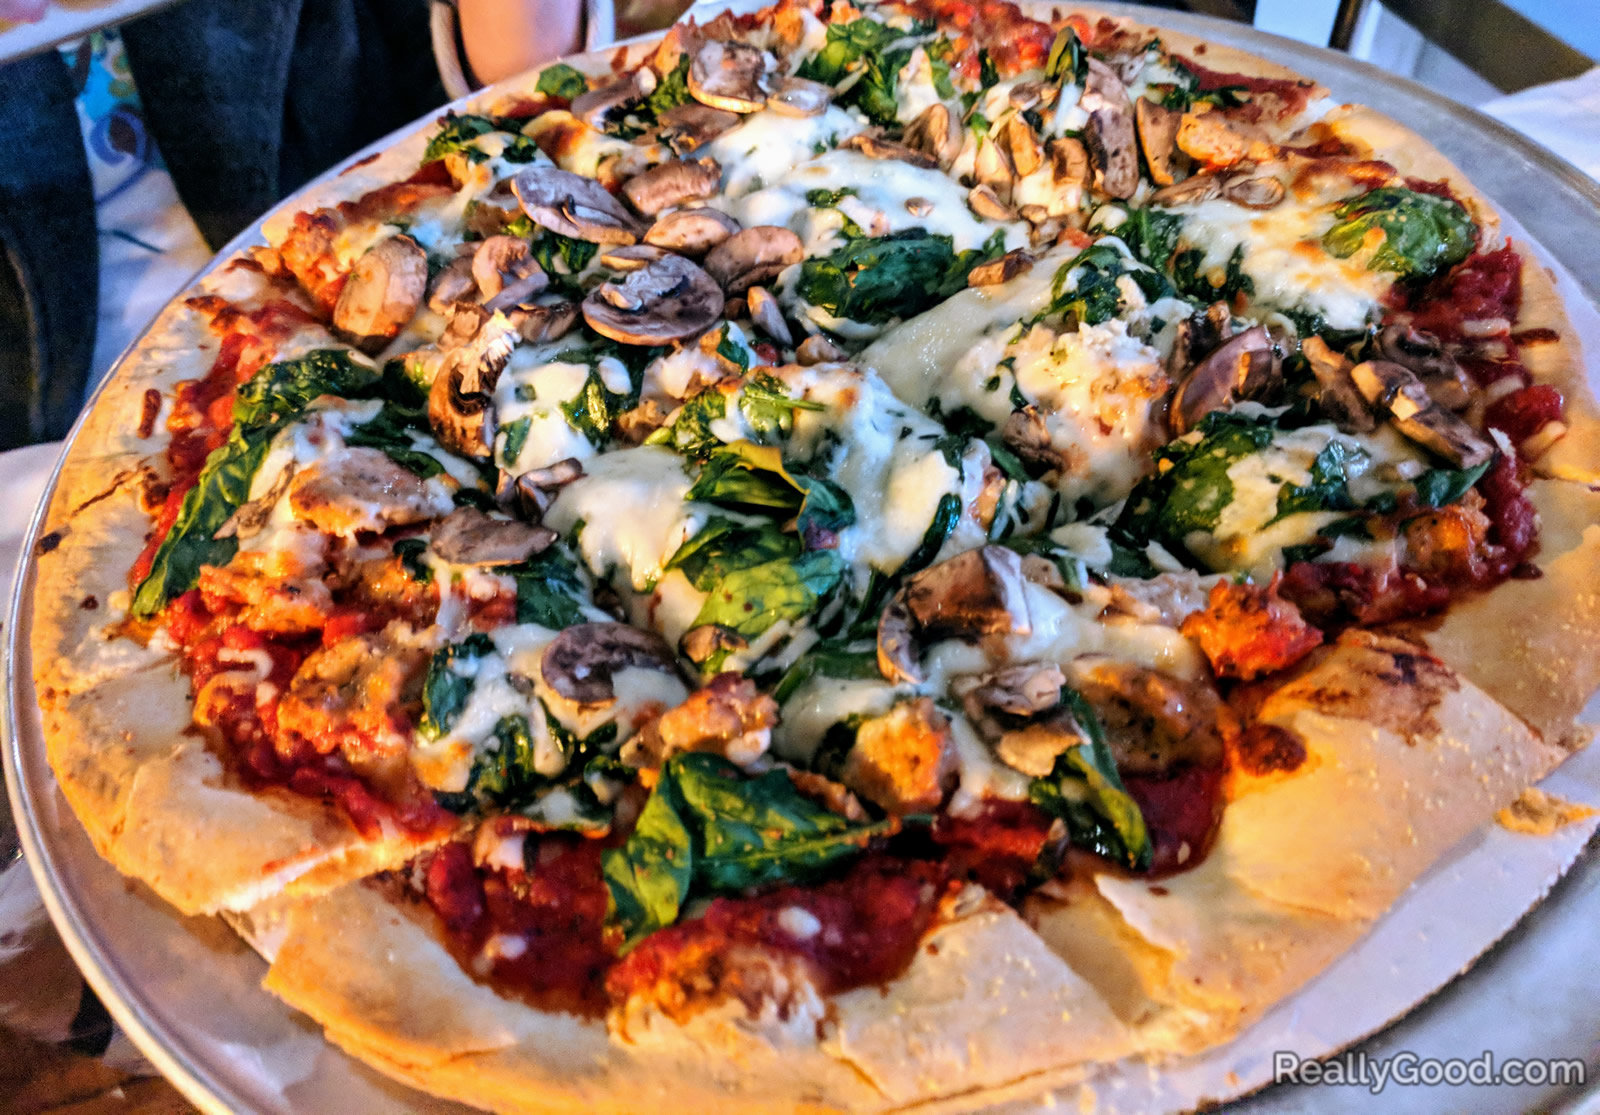 Giordano's pizza